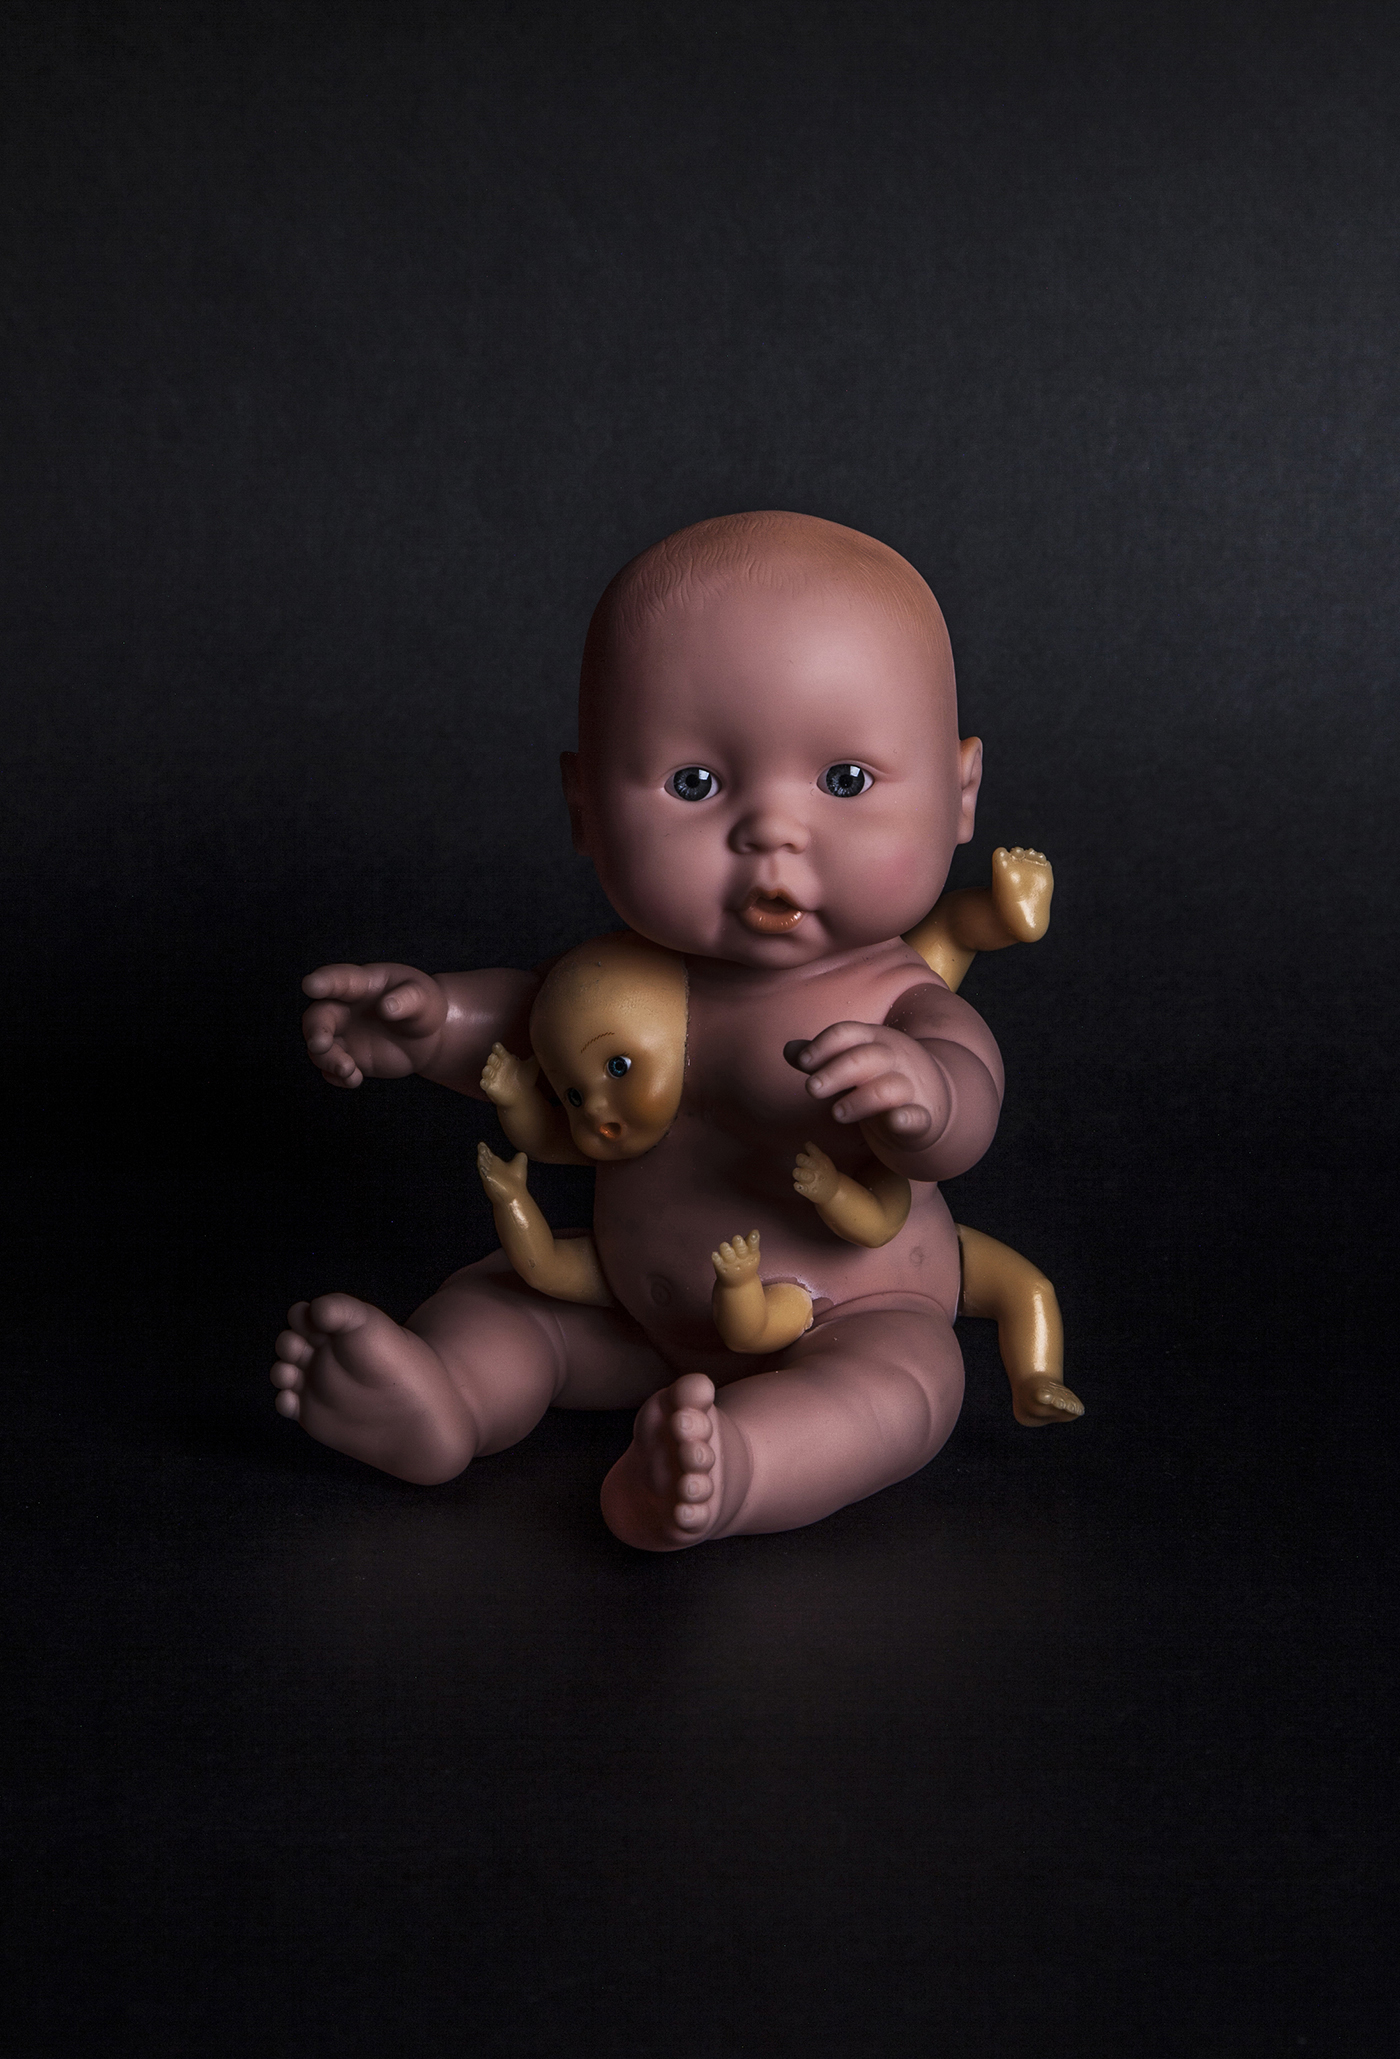 handmade horror doll disorder burned monster fear mind ied milan toy kid product dark creepy